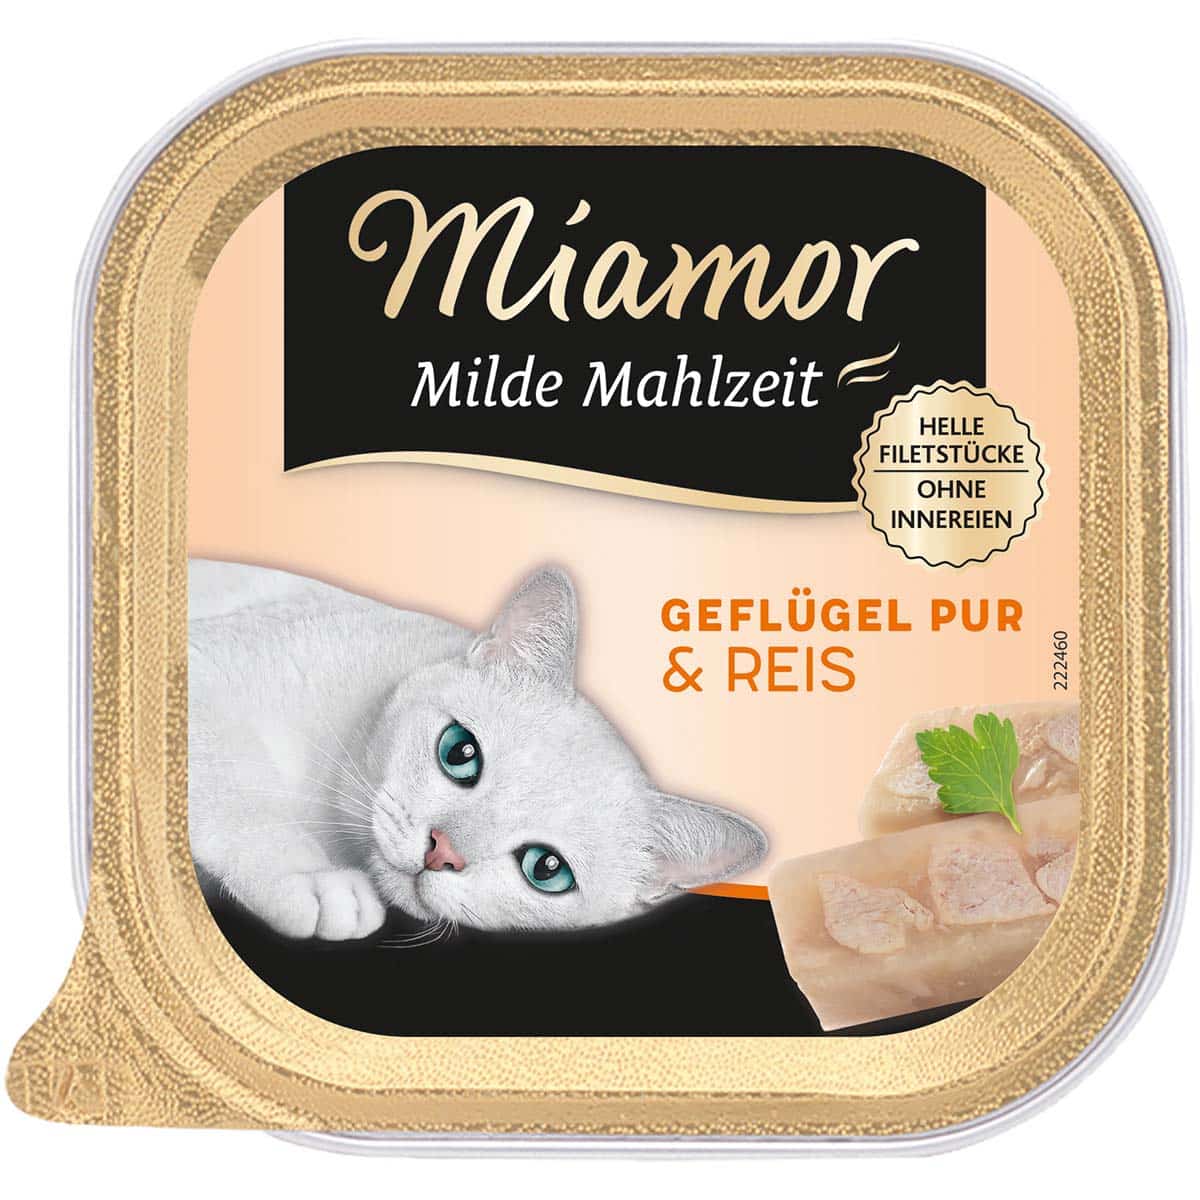 Miamor Milde Mahlzeit Geflügel Pur & Reis 32x100g